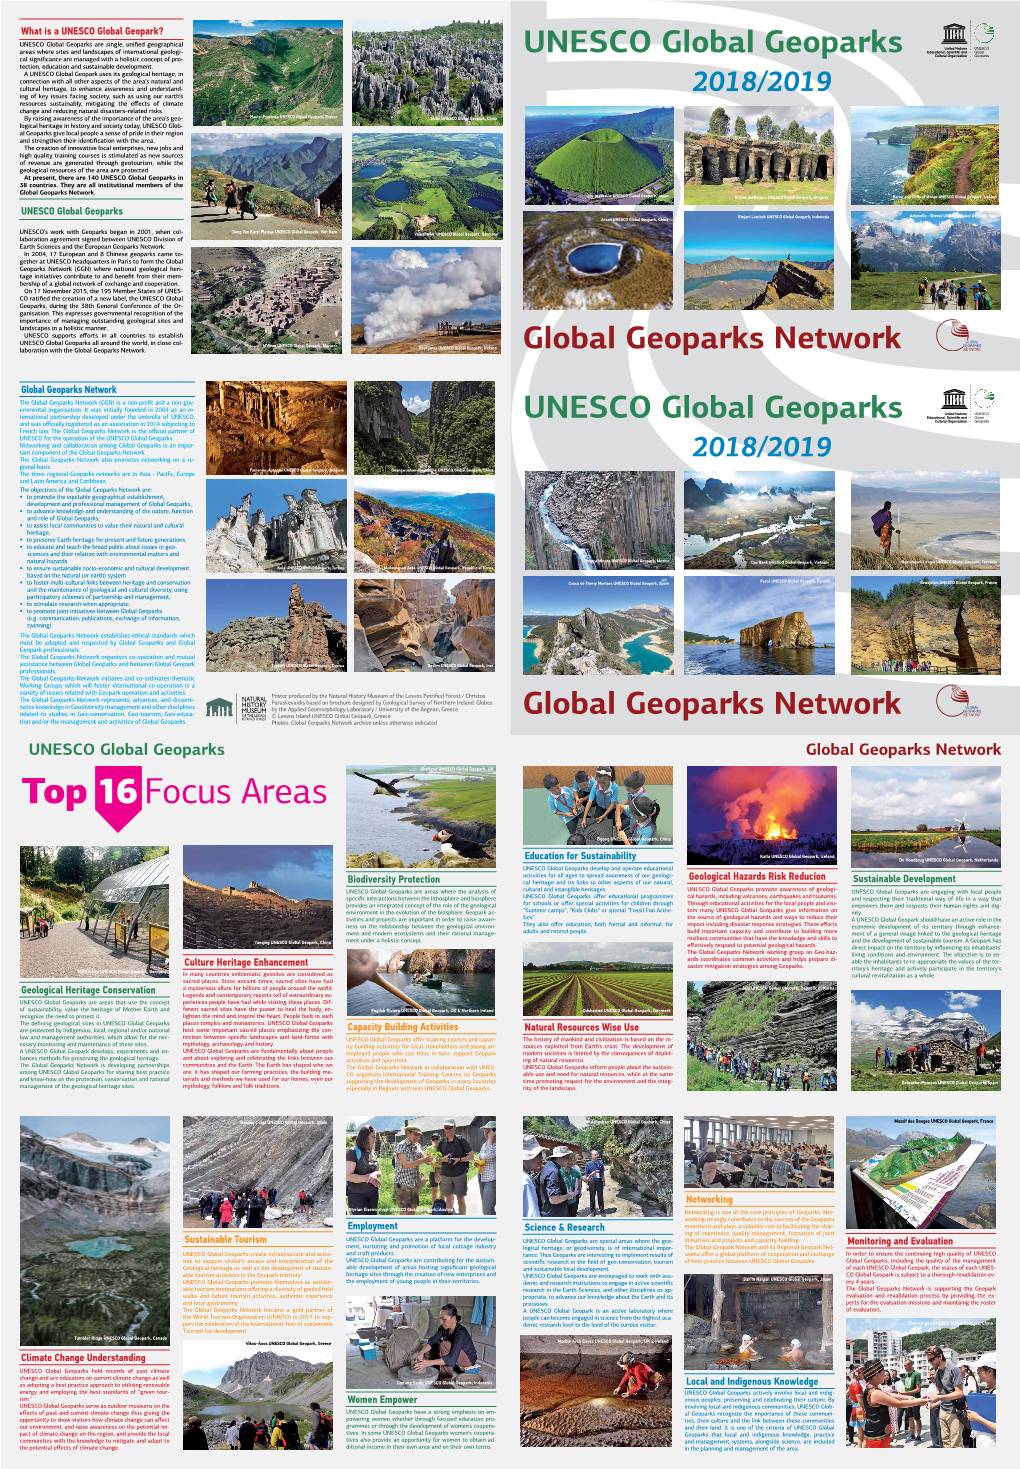 UNESCO Global Geoparks Global Geoparks Network